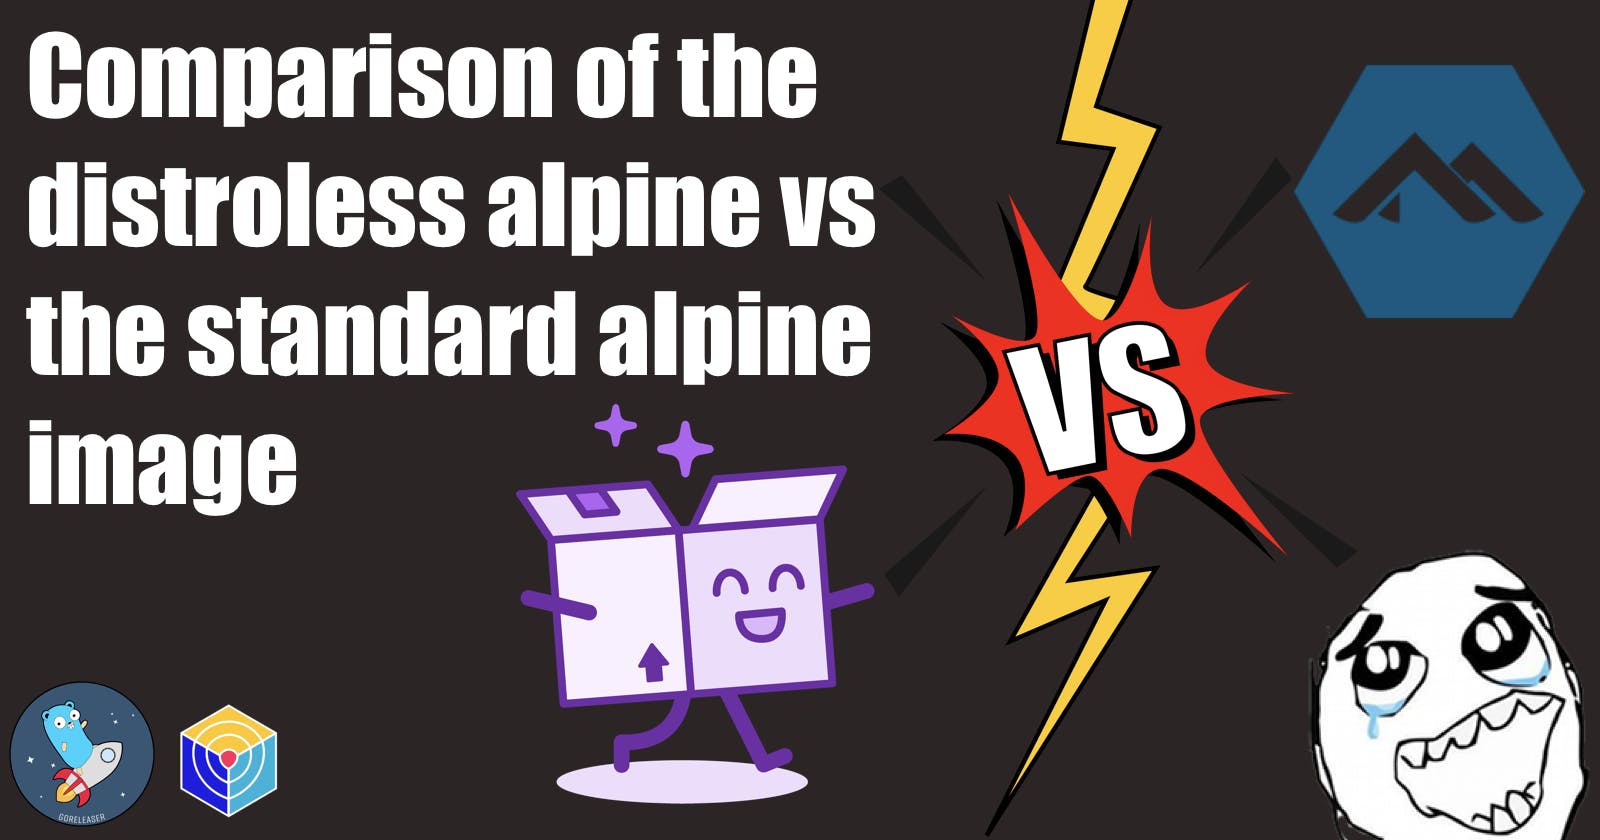 Comparison of the distroless alpine image vs the standard alpine image